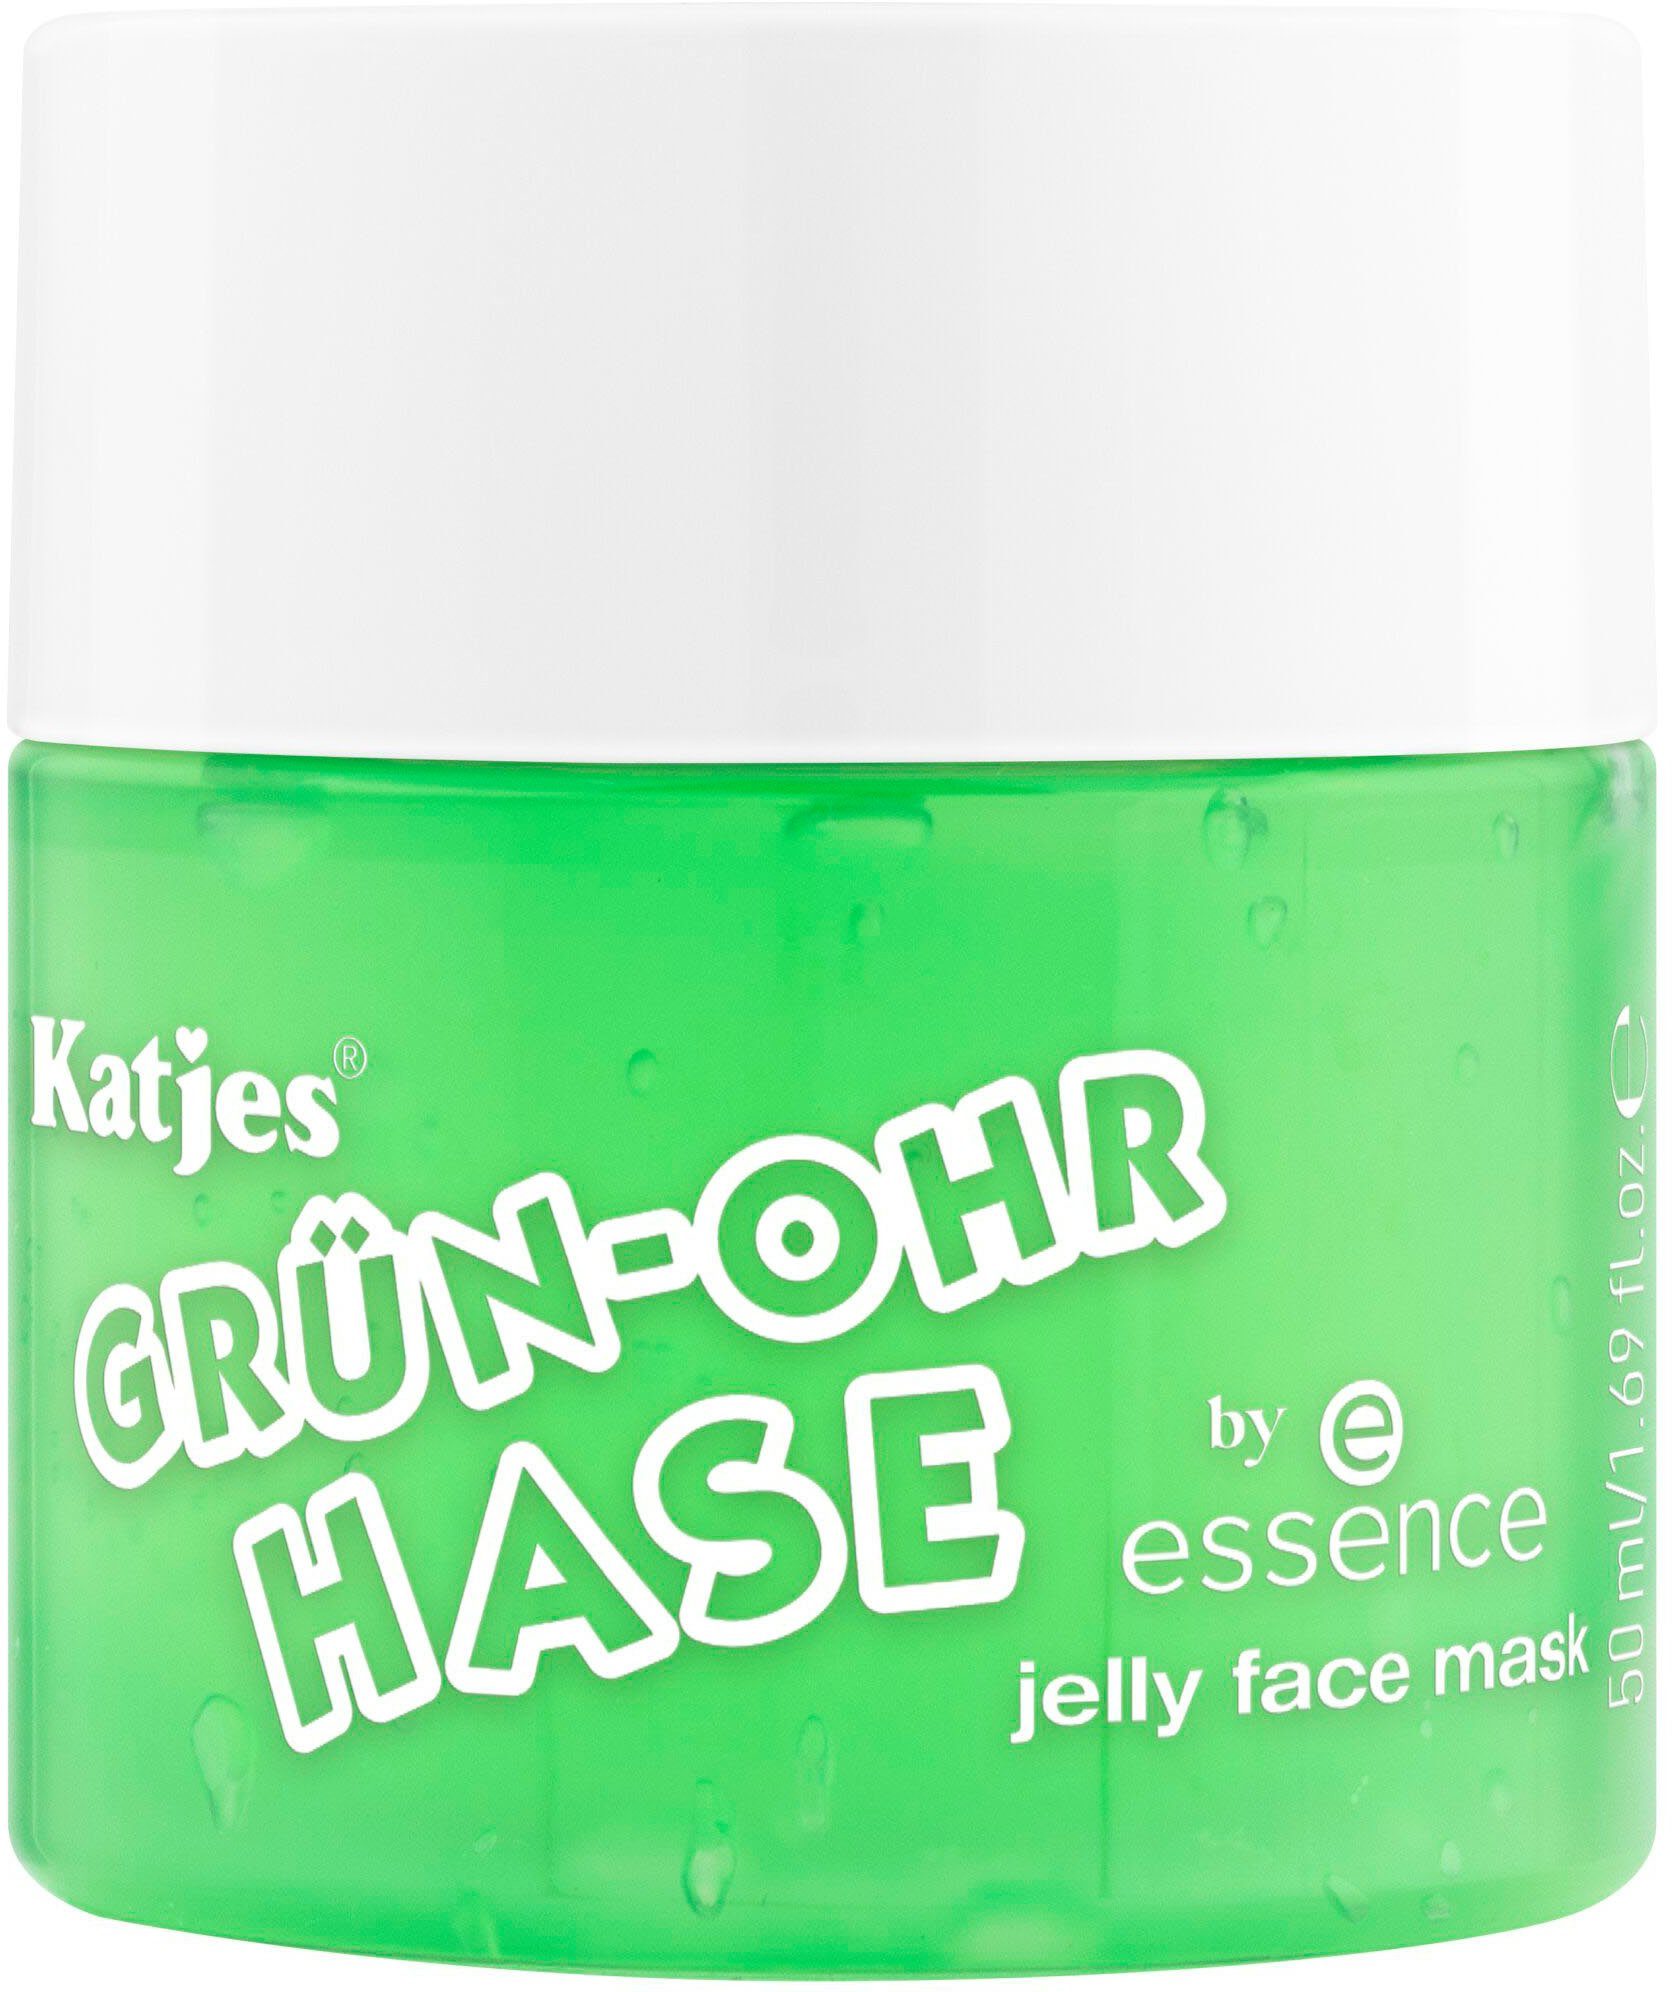 Essence Gesichtsmaske essence jelly 3-tlg. mask face Set